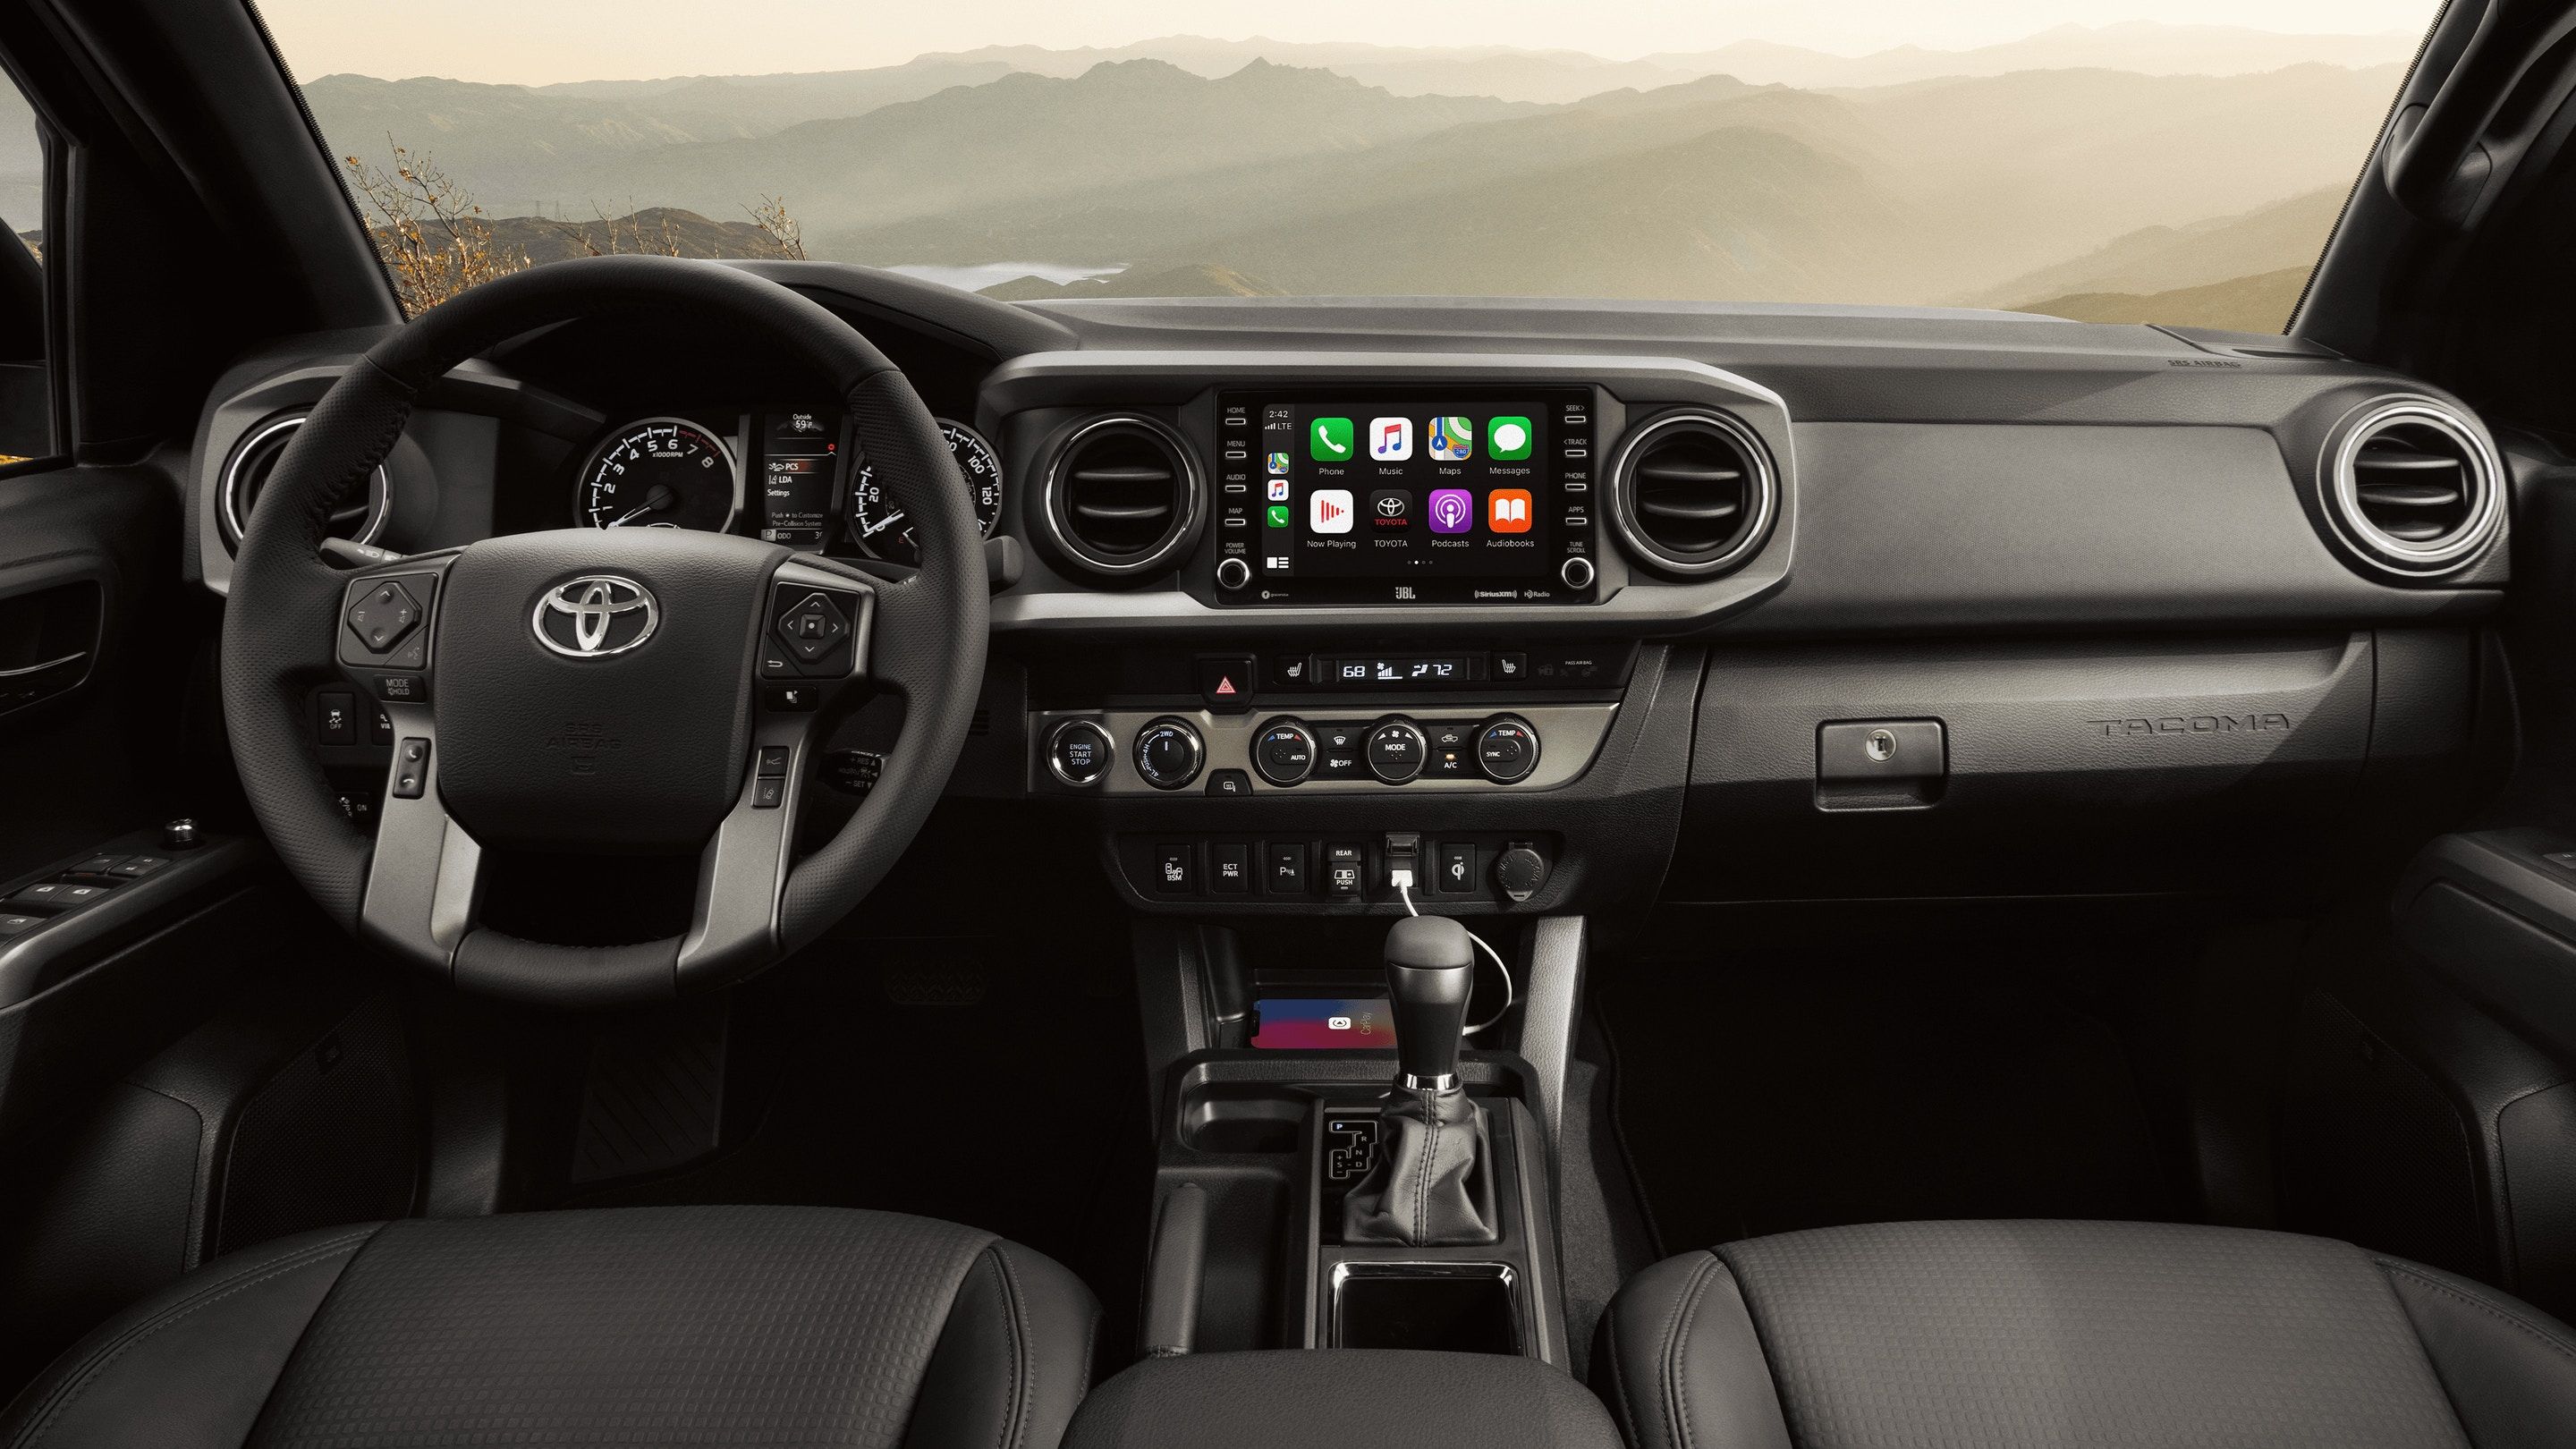 The interior of the 2021 Toyota Tacoma.